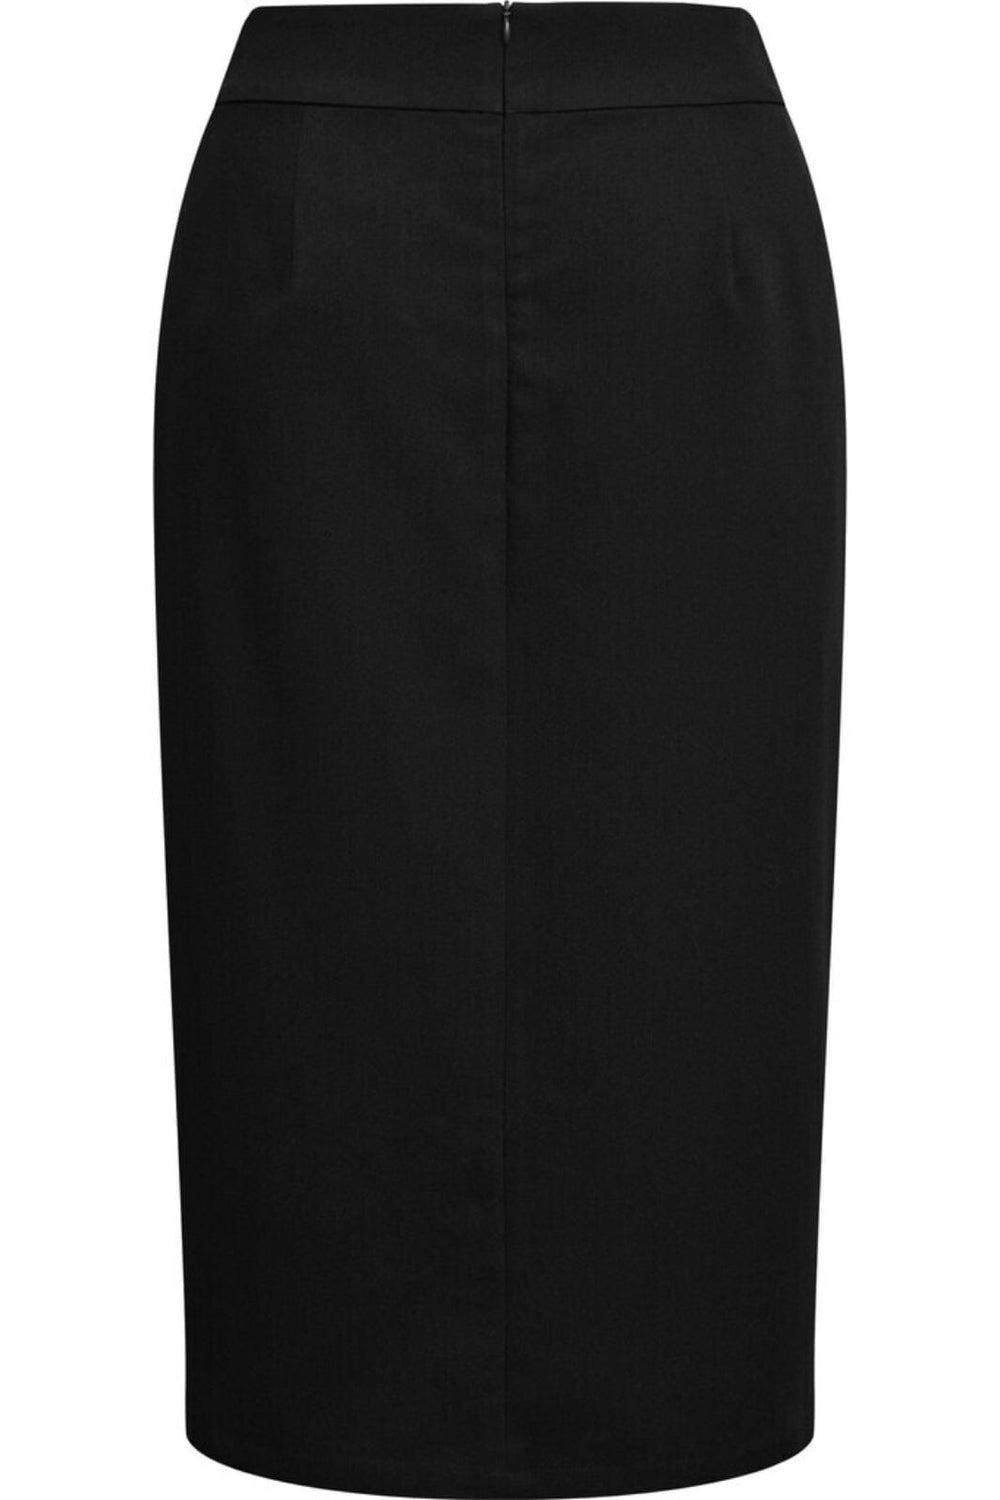 A-VIEW - Sibylle Skirt - 999 Black Nederdele 